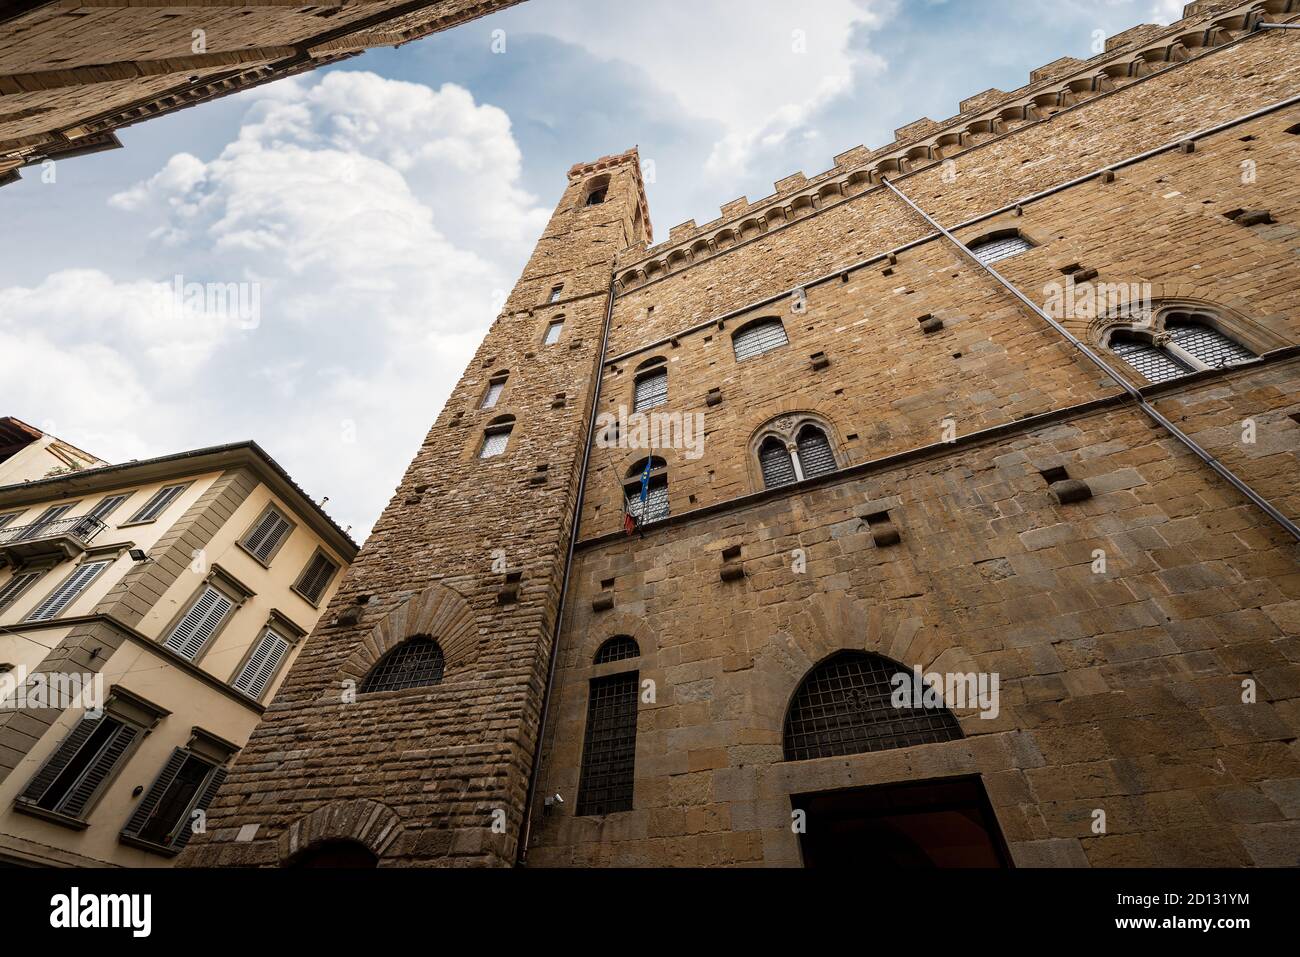 Mittelalterlicher Bargello Palast (Palazzo del Bargello, italienisch) in Florenz Innenstadt, UNESCO Weltkulturerbe, Toskana, Italien, Europa. Stockfoto